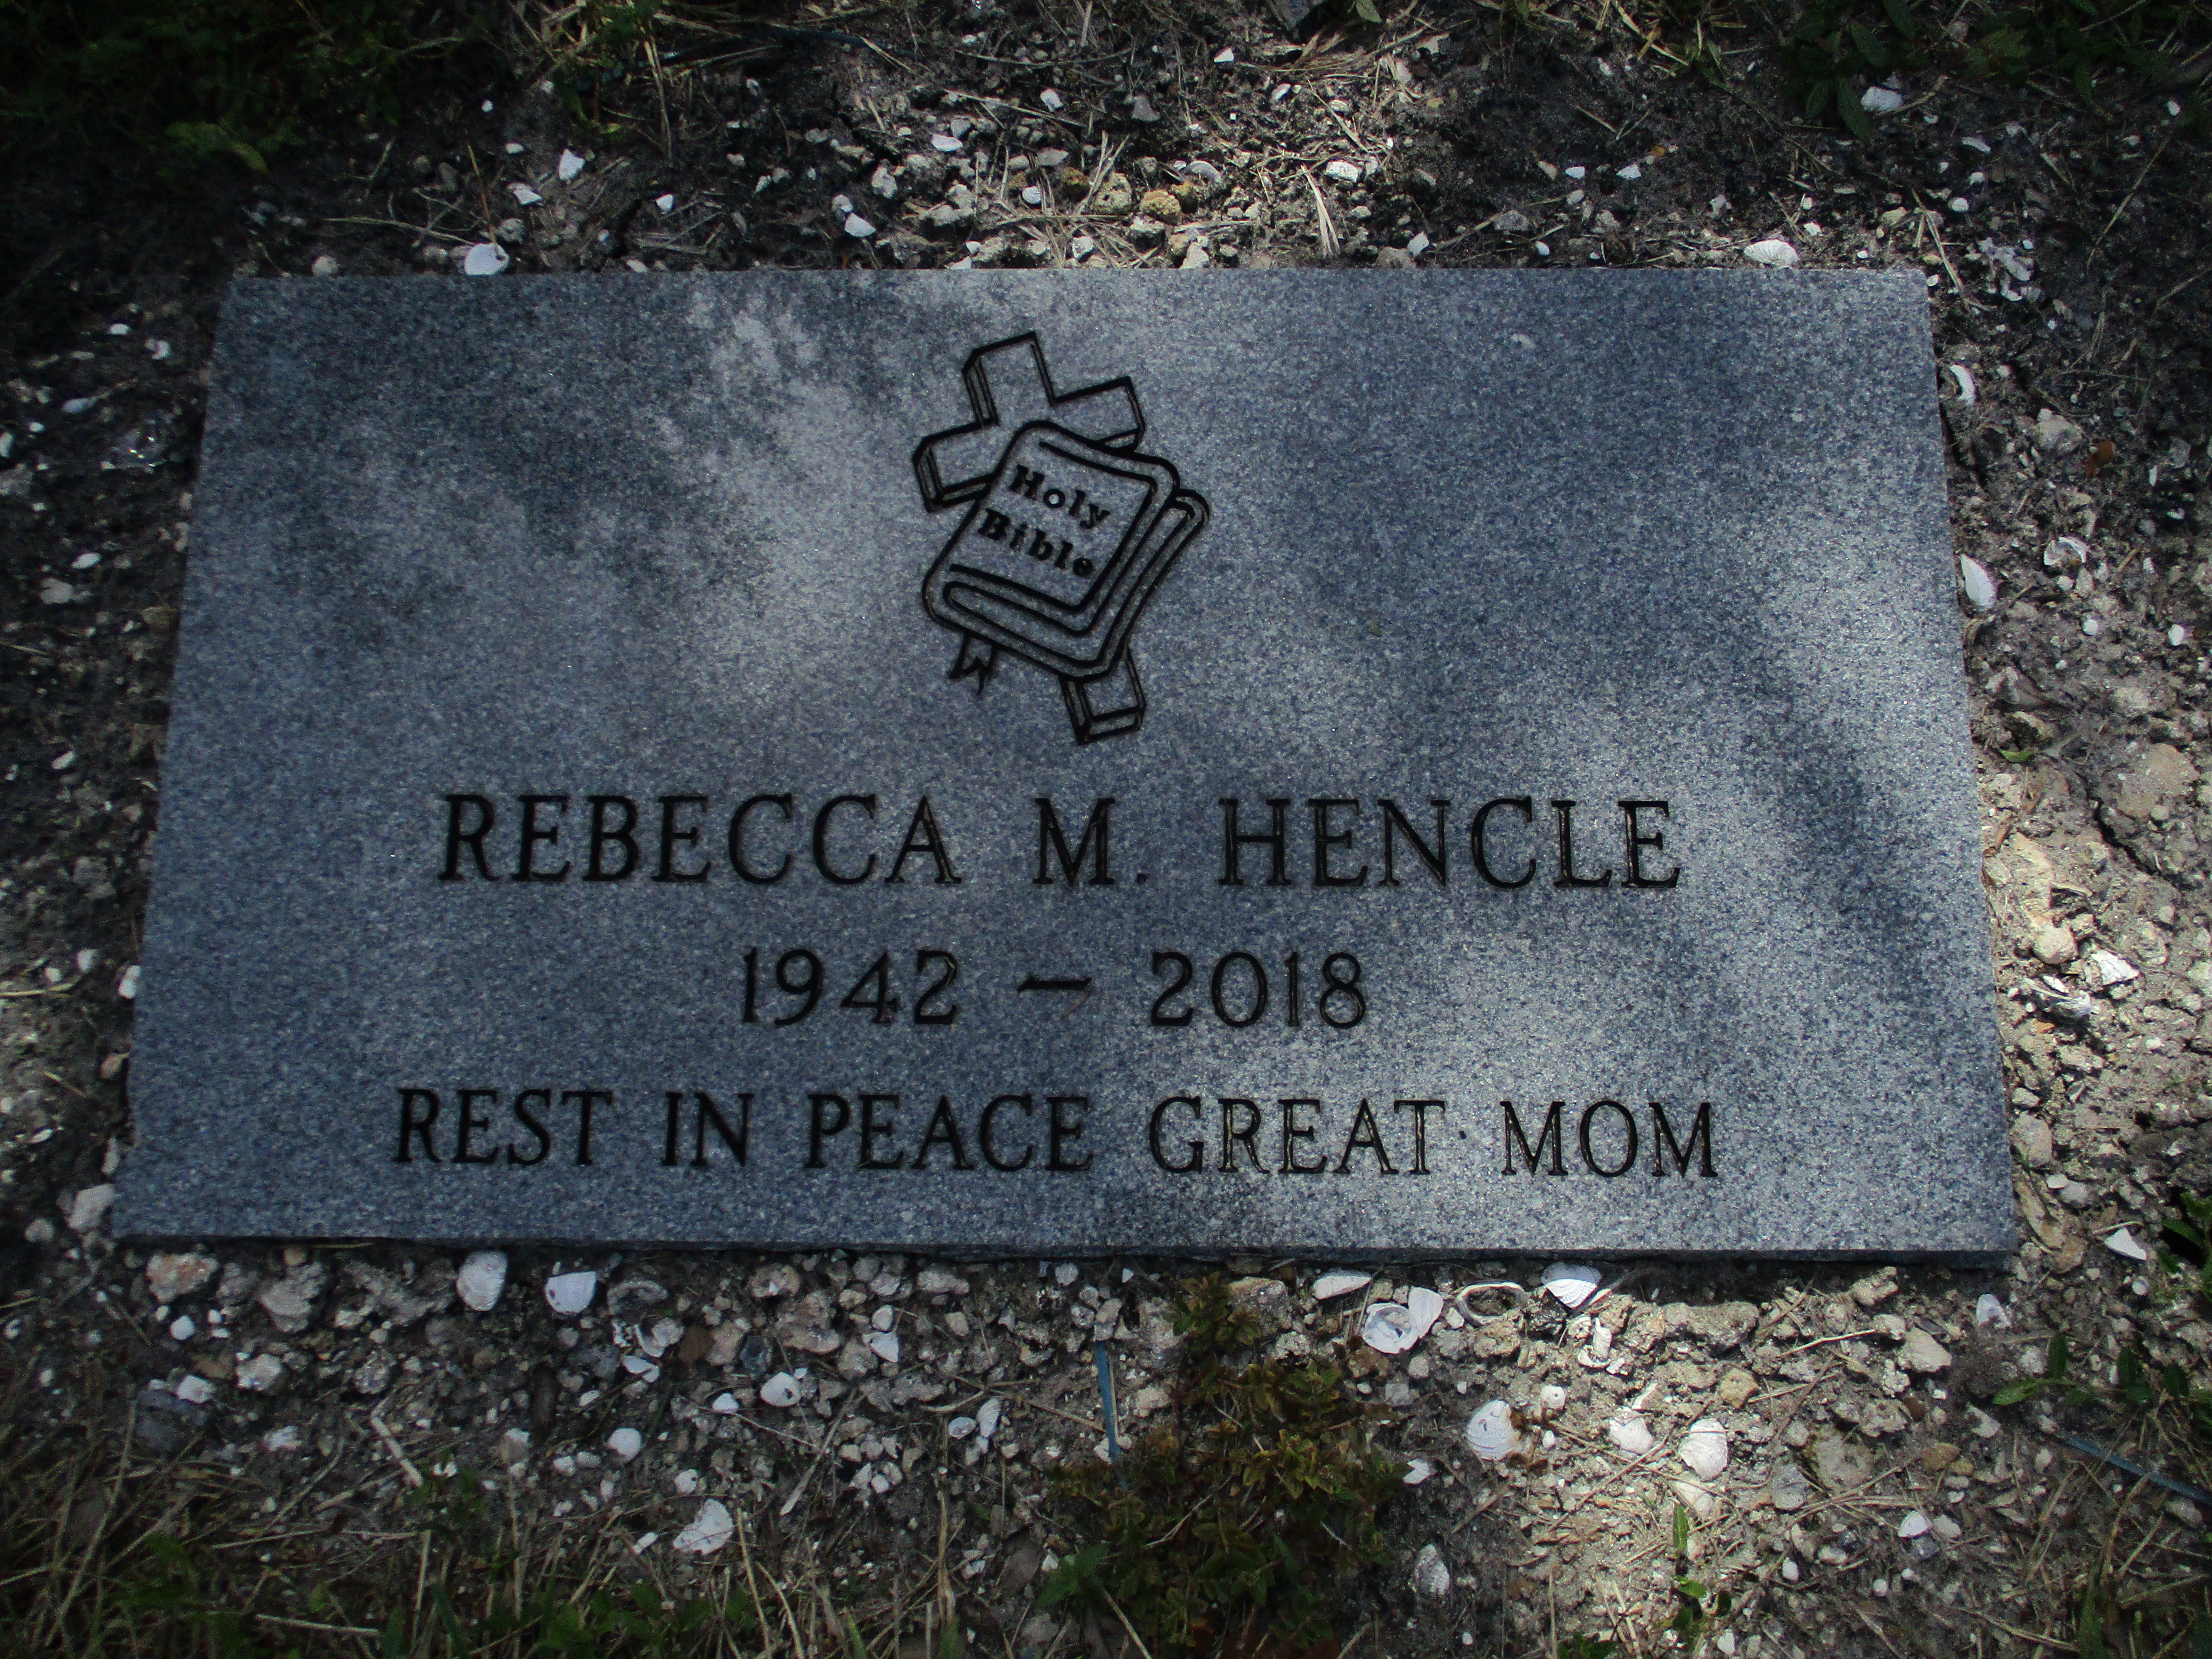 Rebecca M Hencle